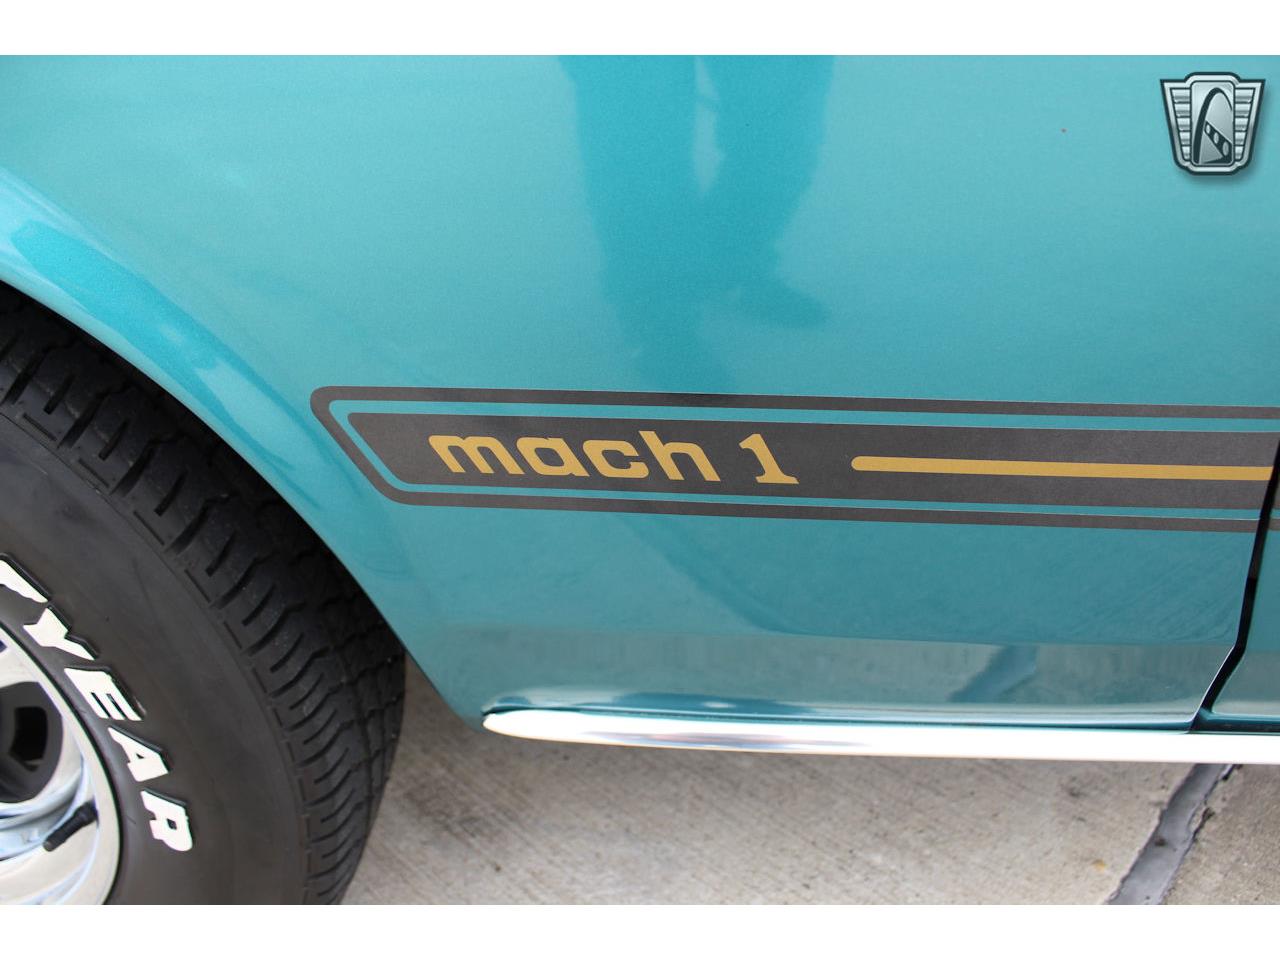 Ford Mustang Mach 1 v8 351 ho 1969 prix tout compris